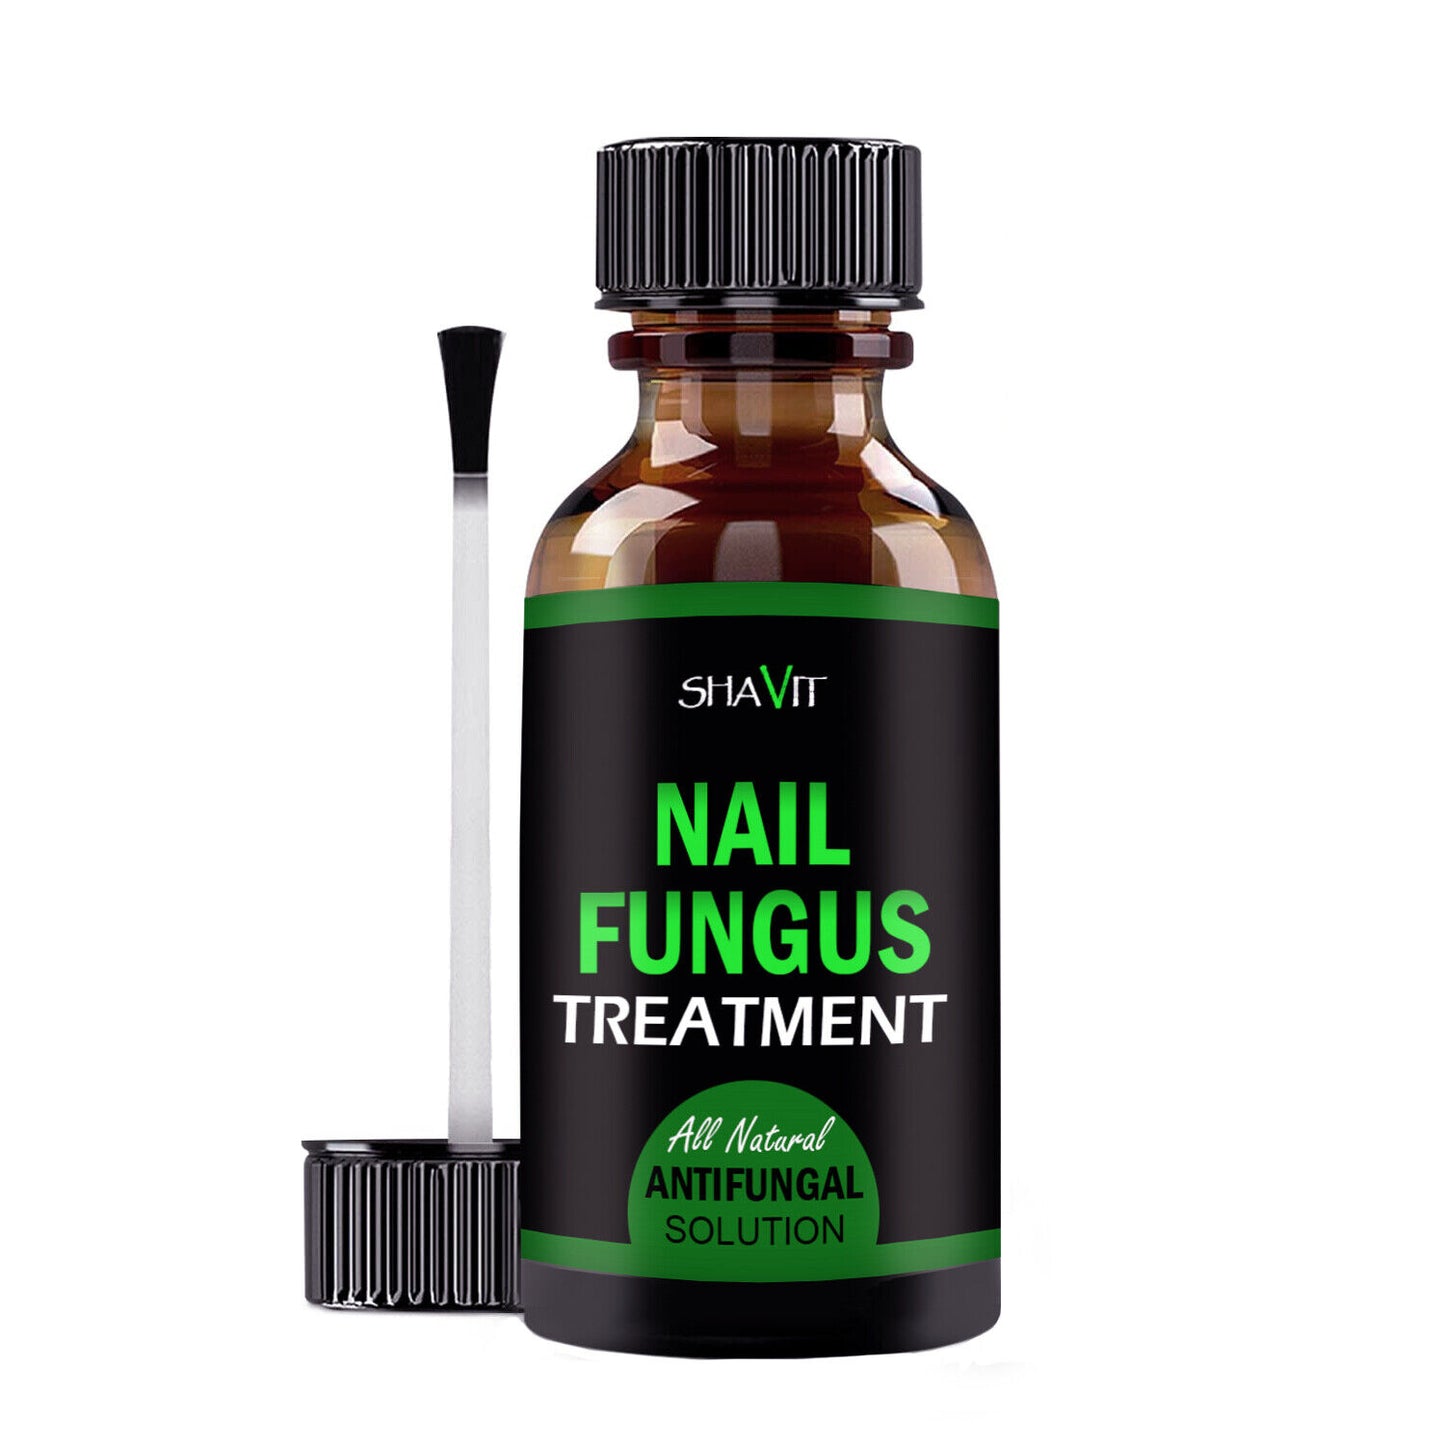 Anti-Fungal Treatment - Extra Strength